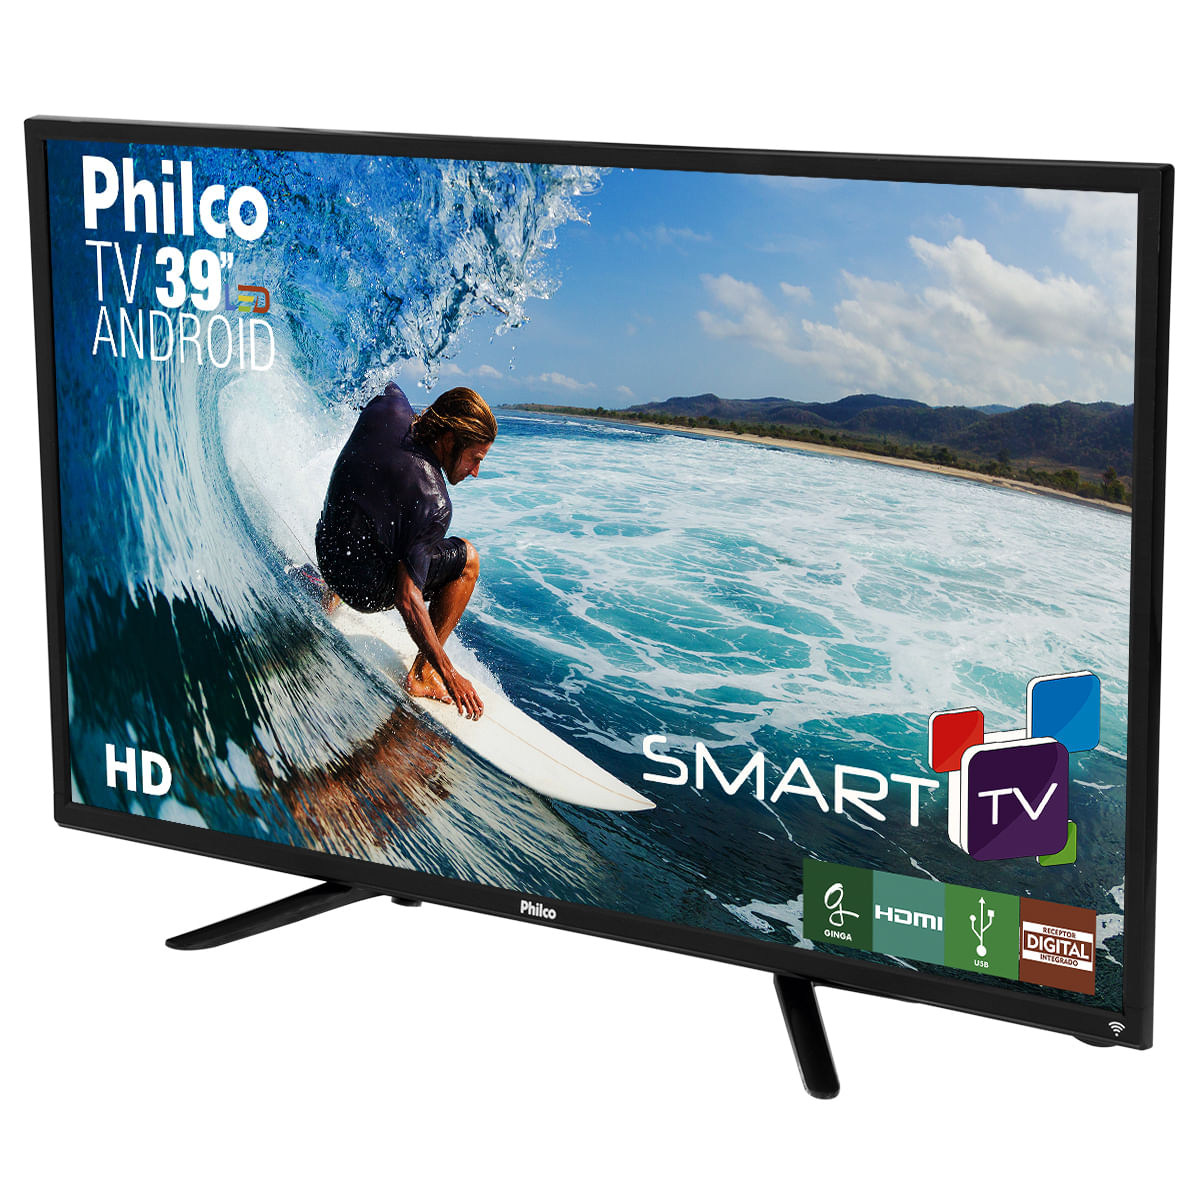 Smart TV Philco Android Led 39” PH39N91DSGWA - Eletroclub